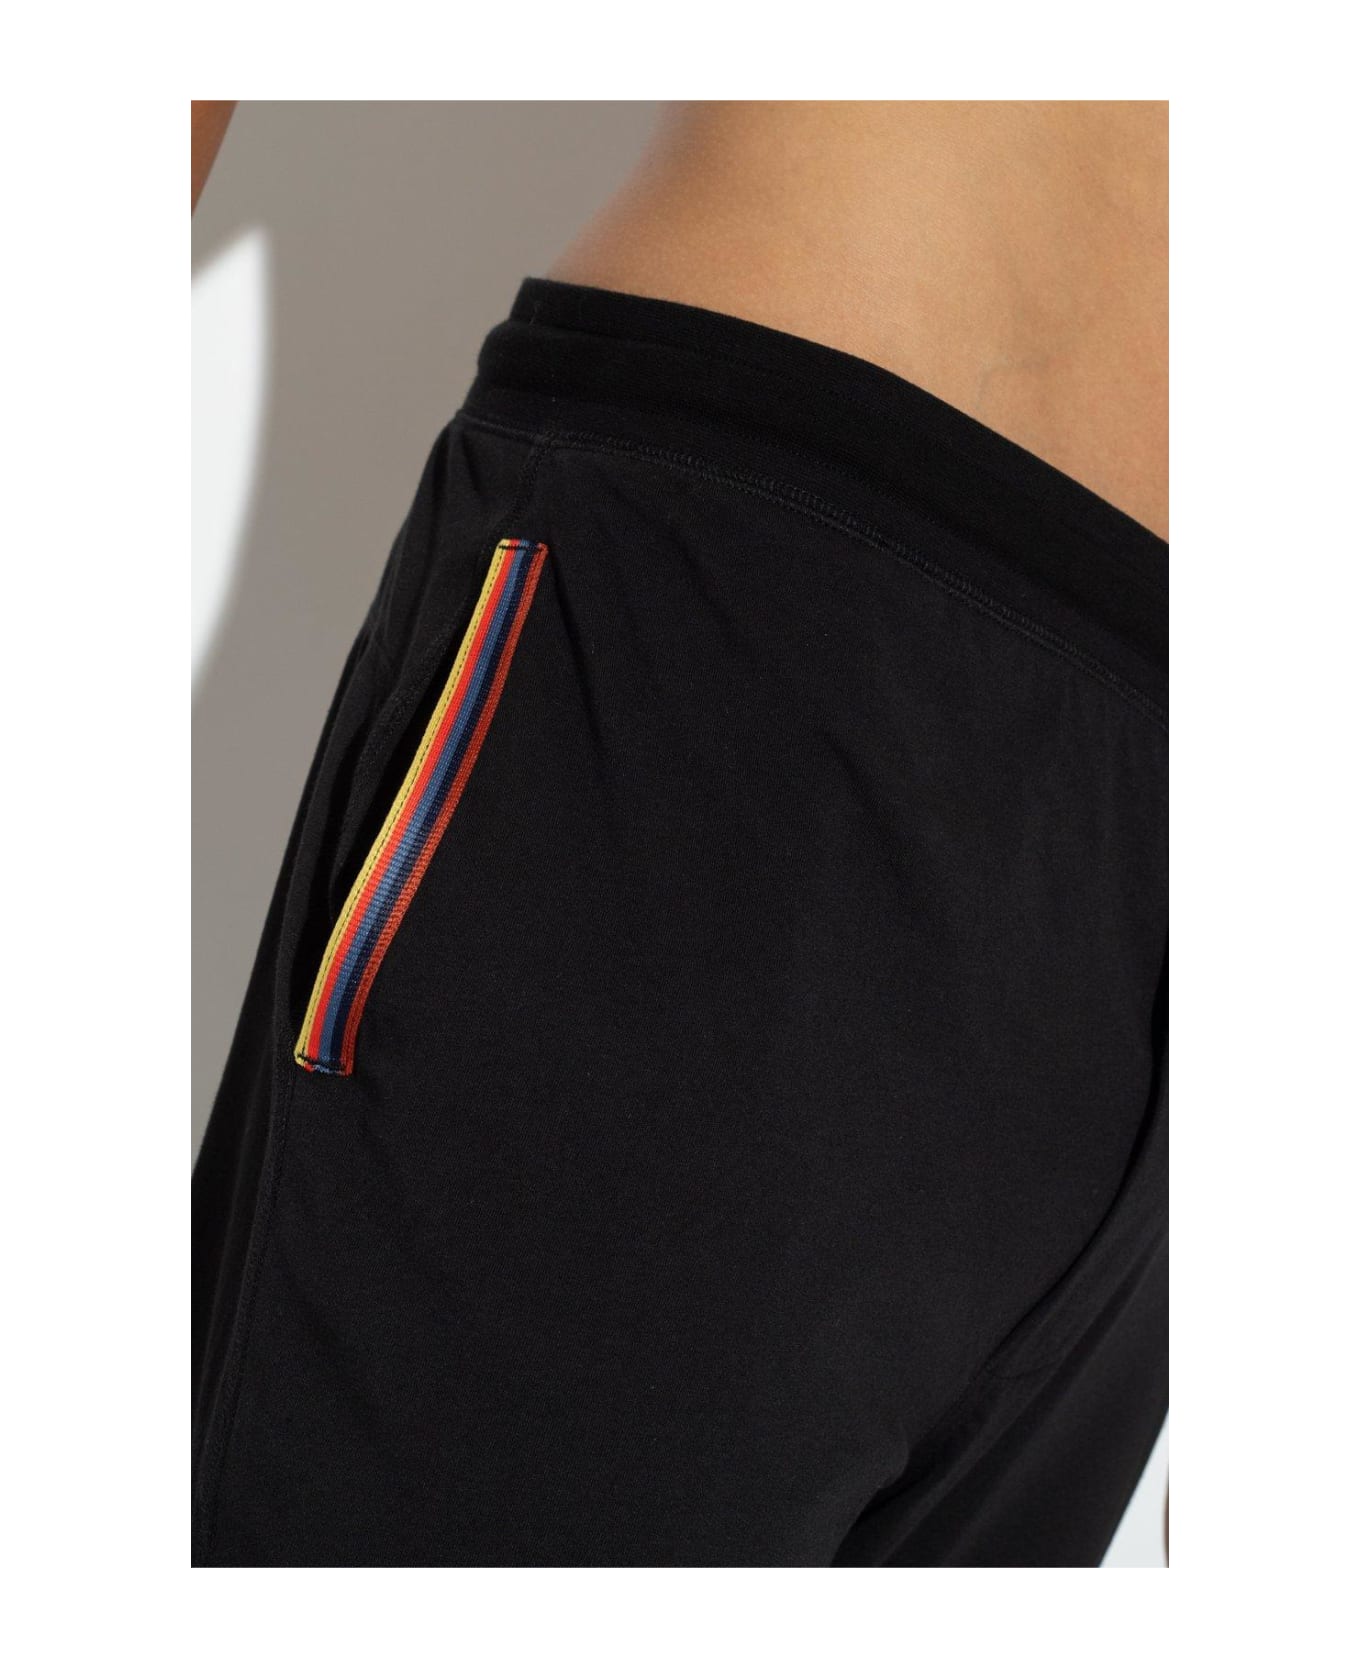 Paul Smith Sweatpants With Pockets - Black スウェットパンツ